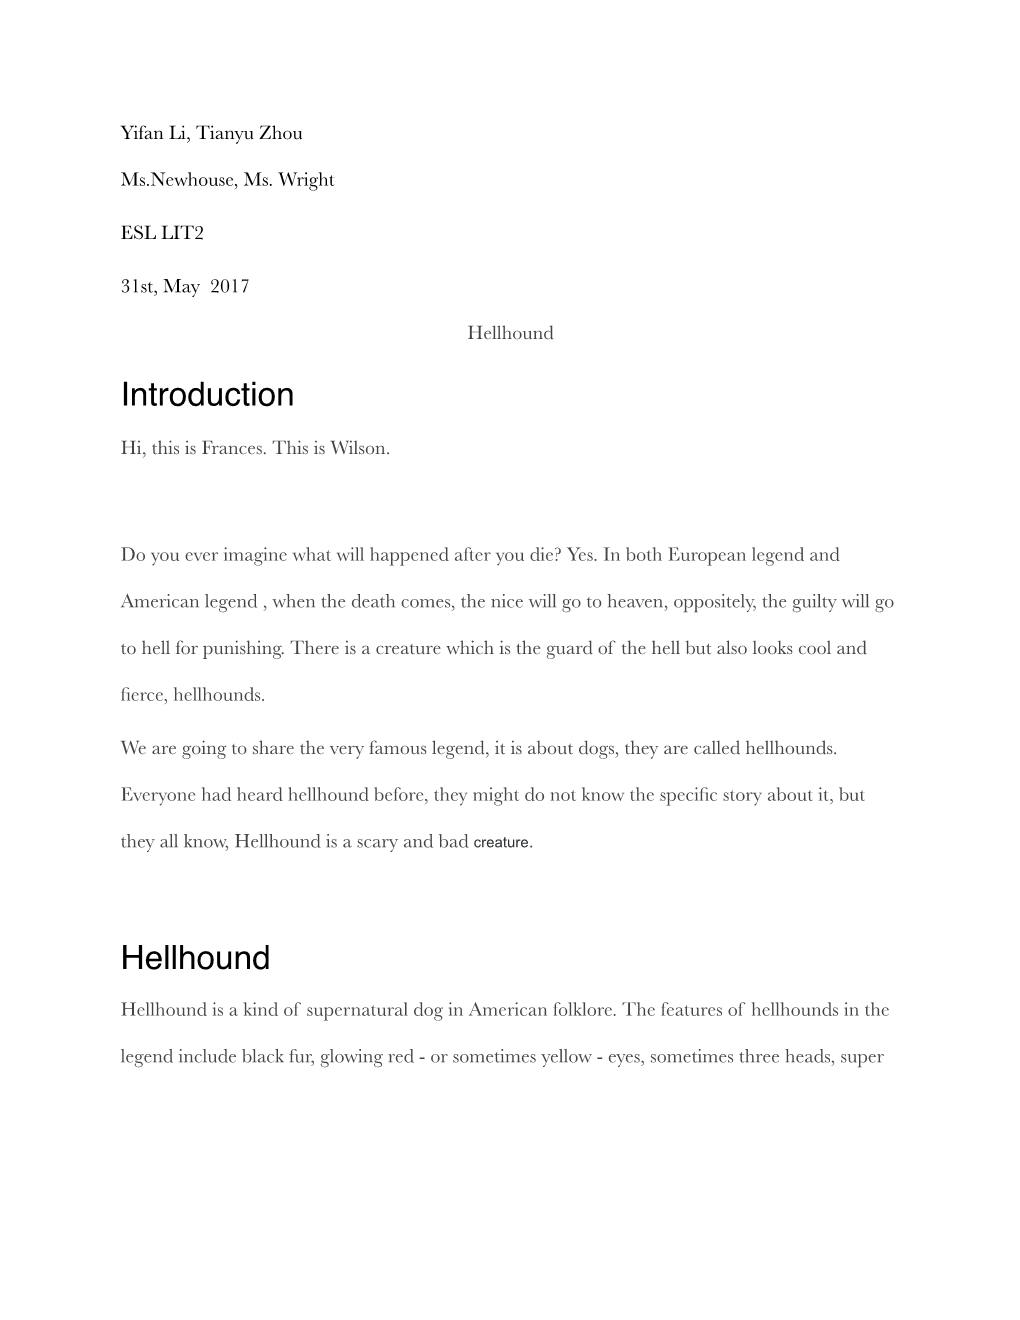 Introduction Hellhound